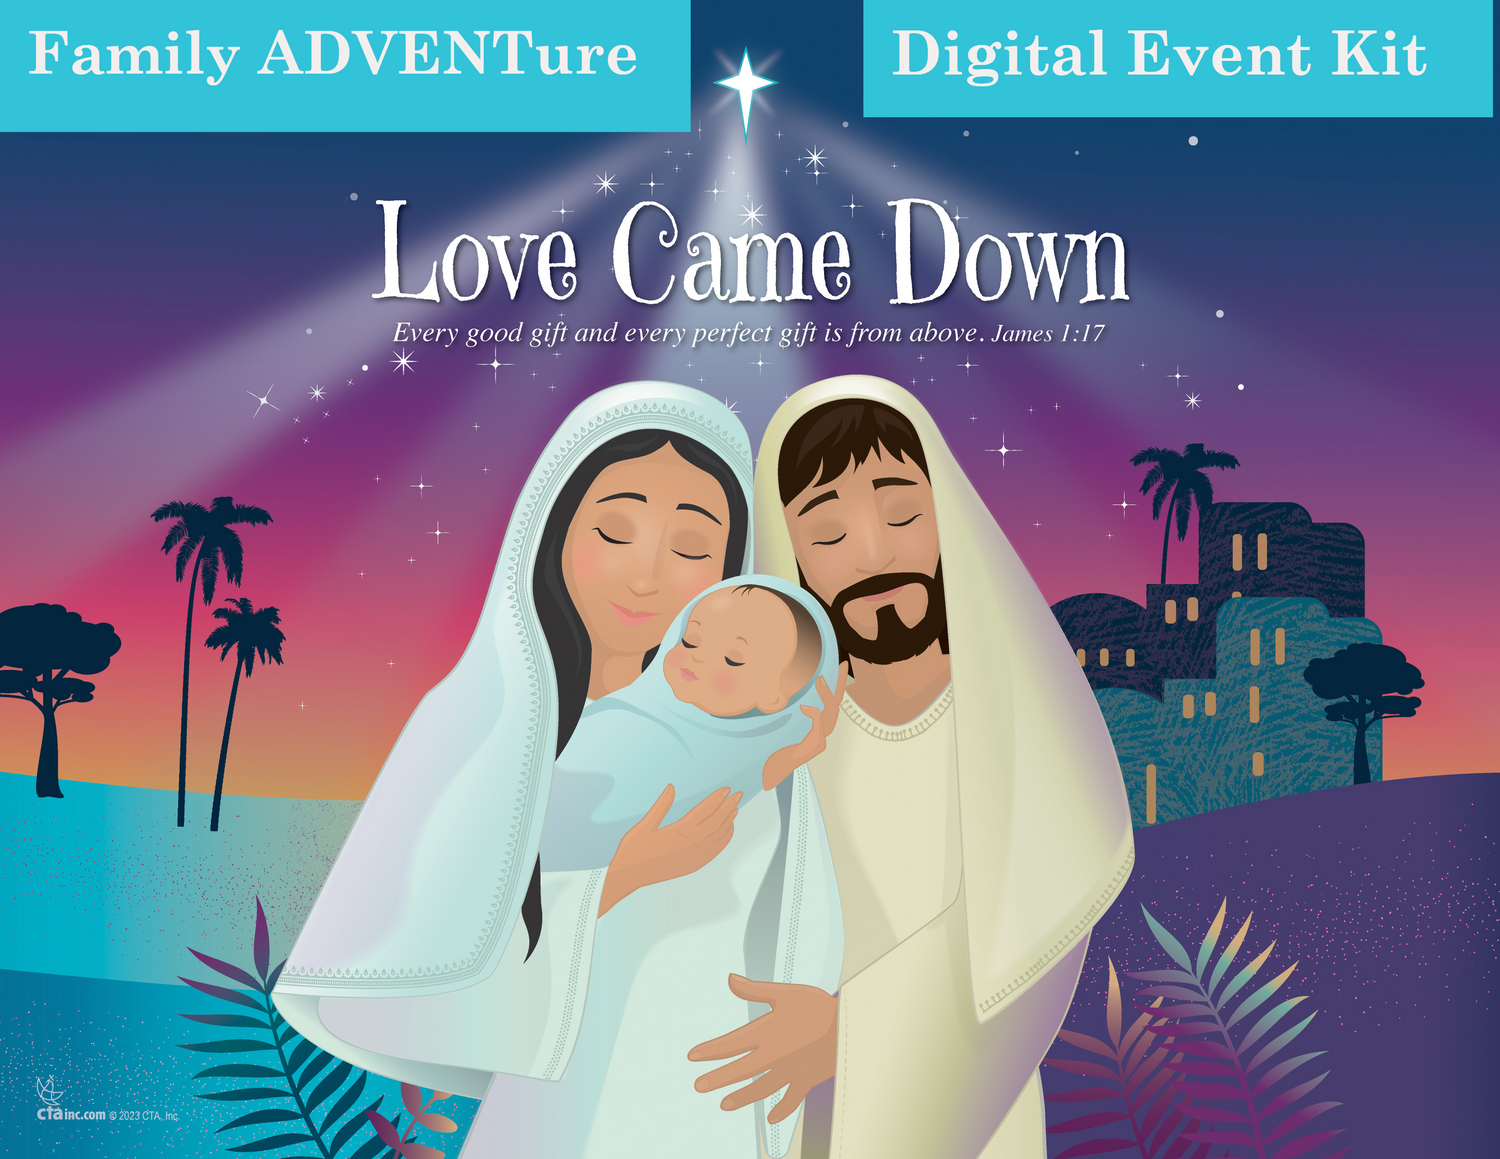 Digital Event Kit - Family ADVENTure